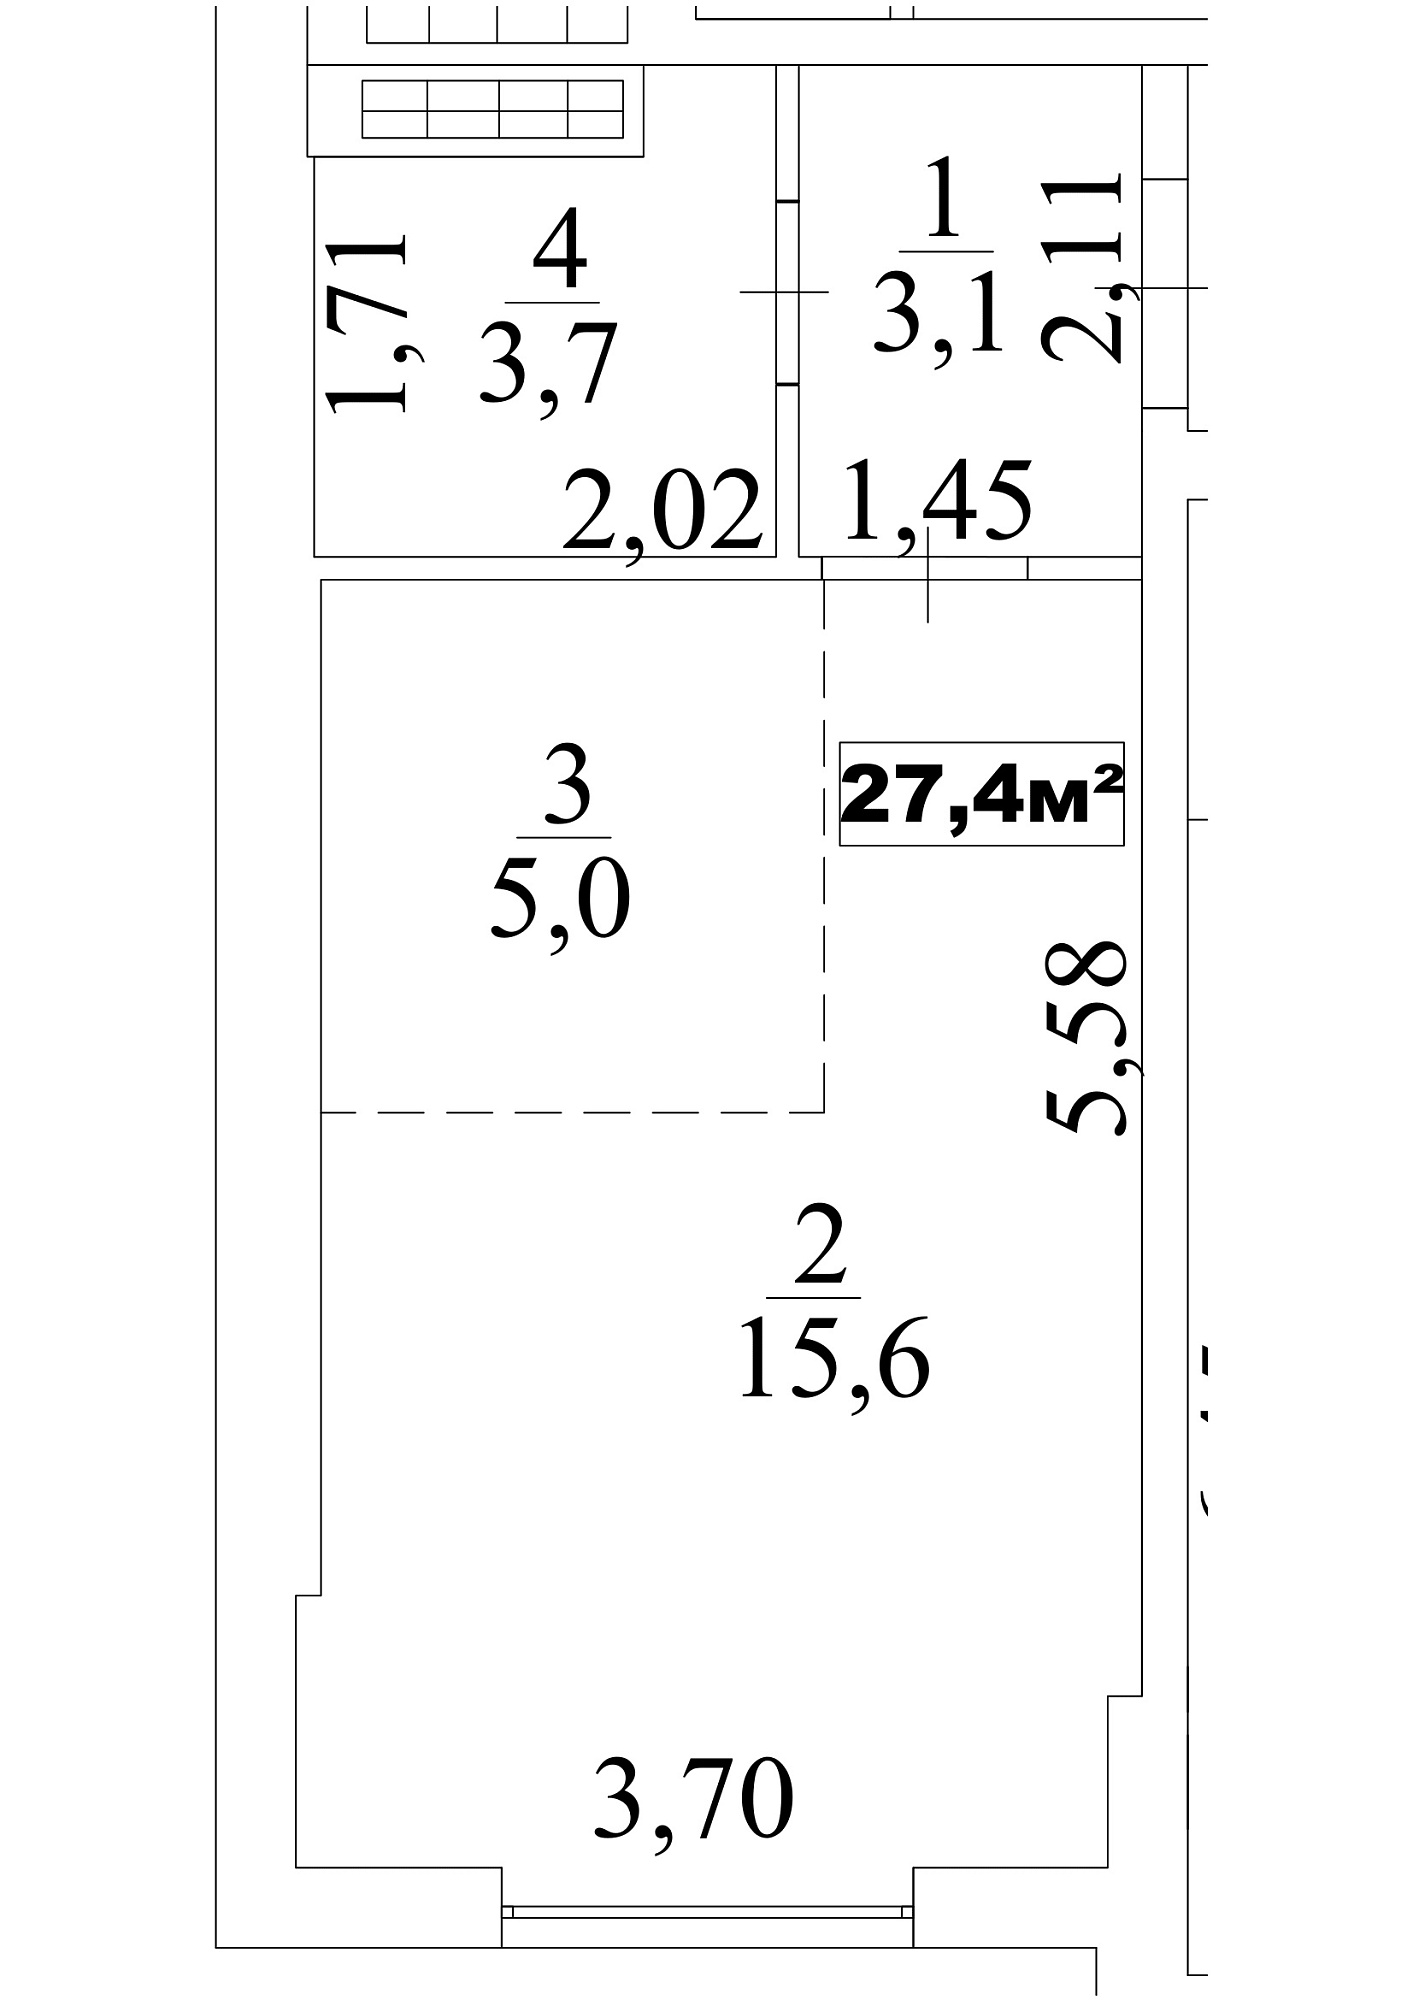 Planning Smart flats area 27.4m2, AB-10-04/0030а.